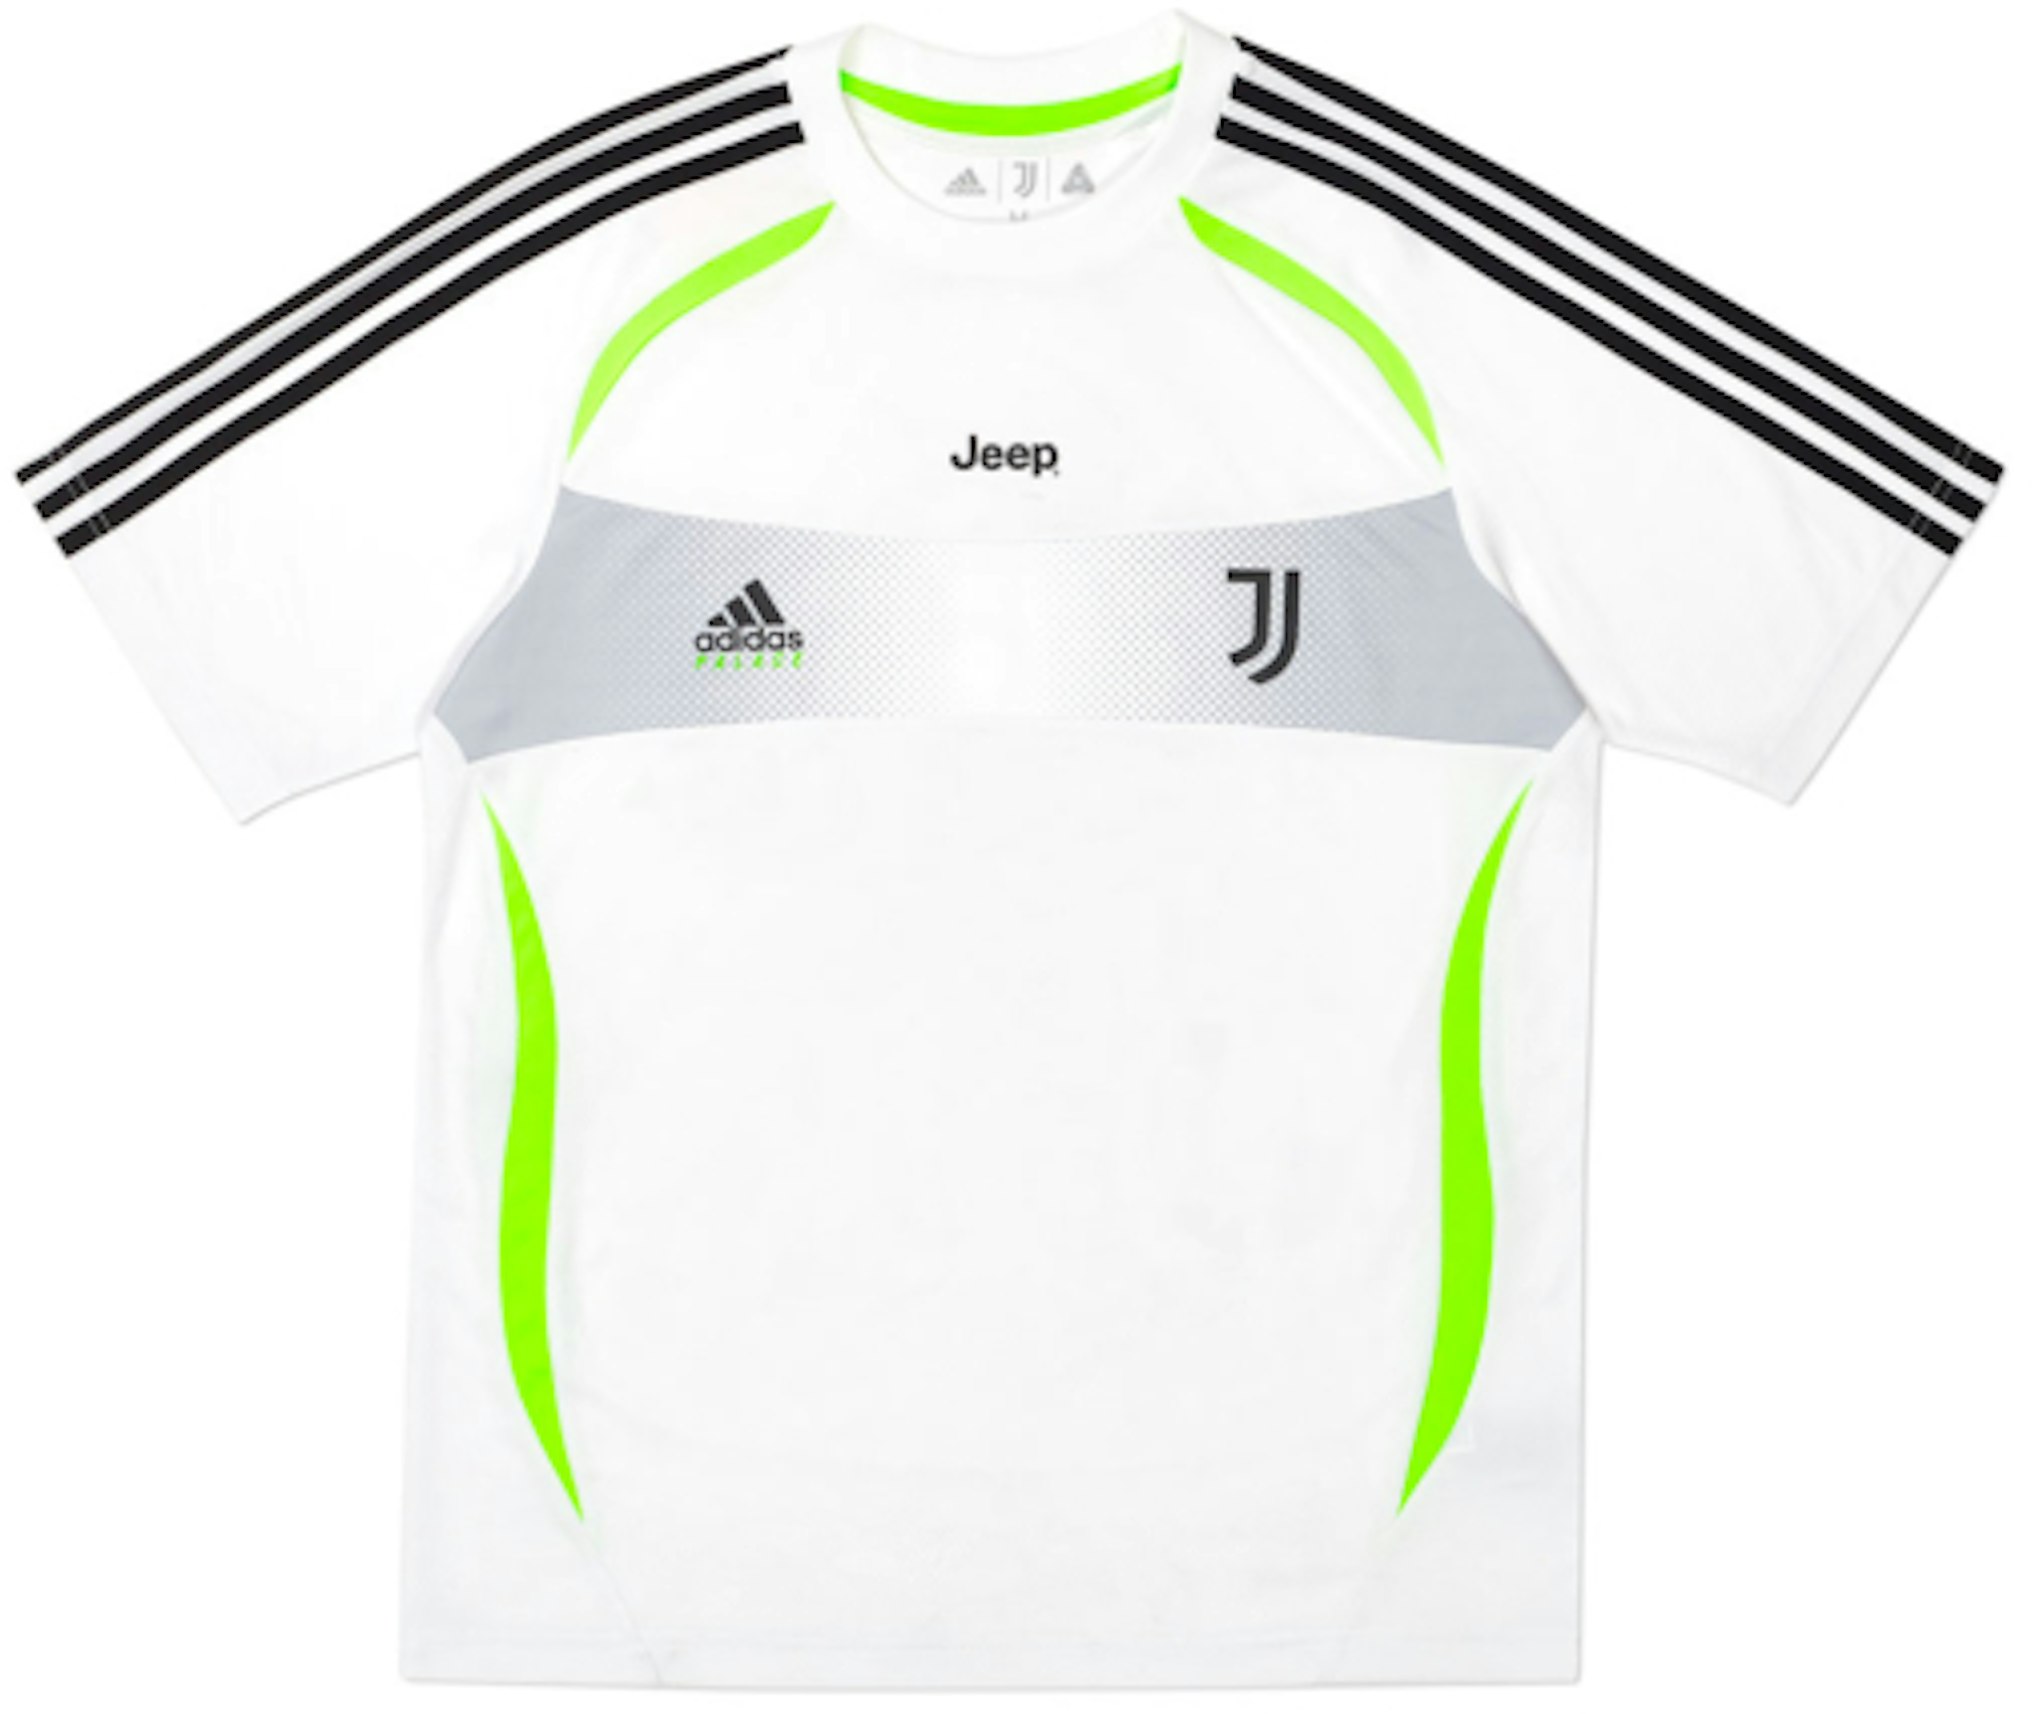 Indulgente monstruo Menos que Palace Adidas Palace Juventus T-Shirt White - FW19 Men's - US